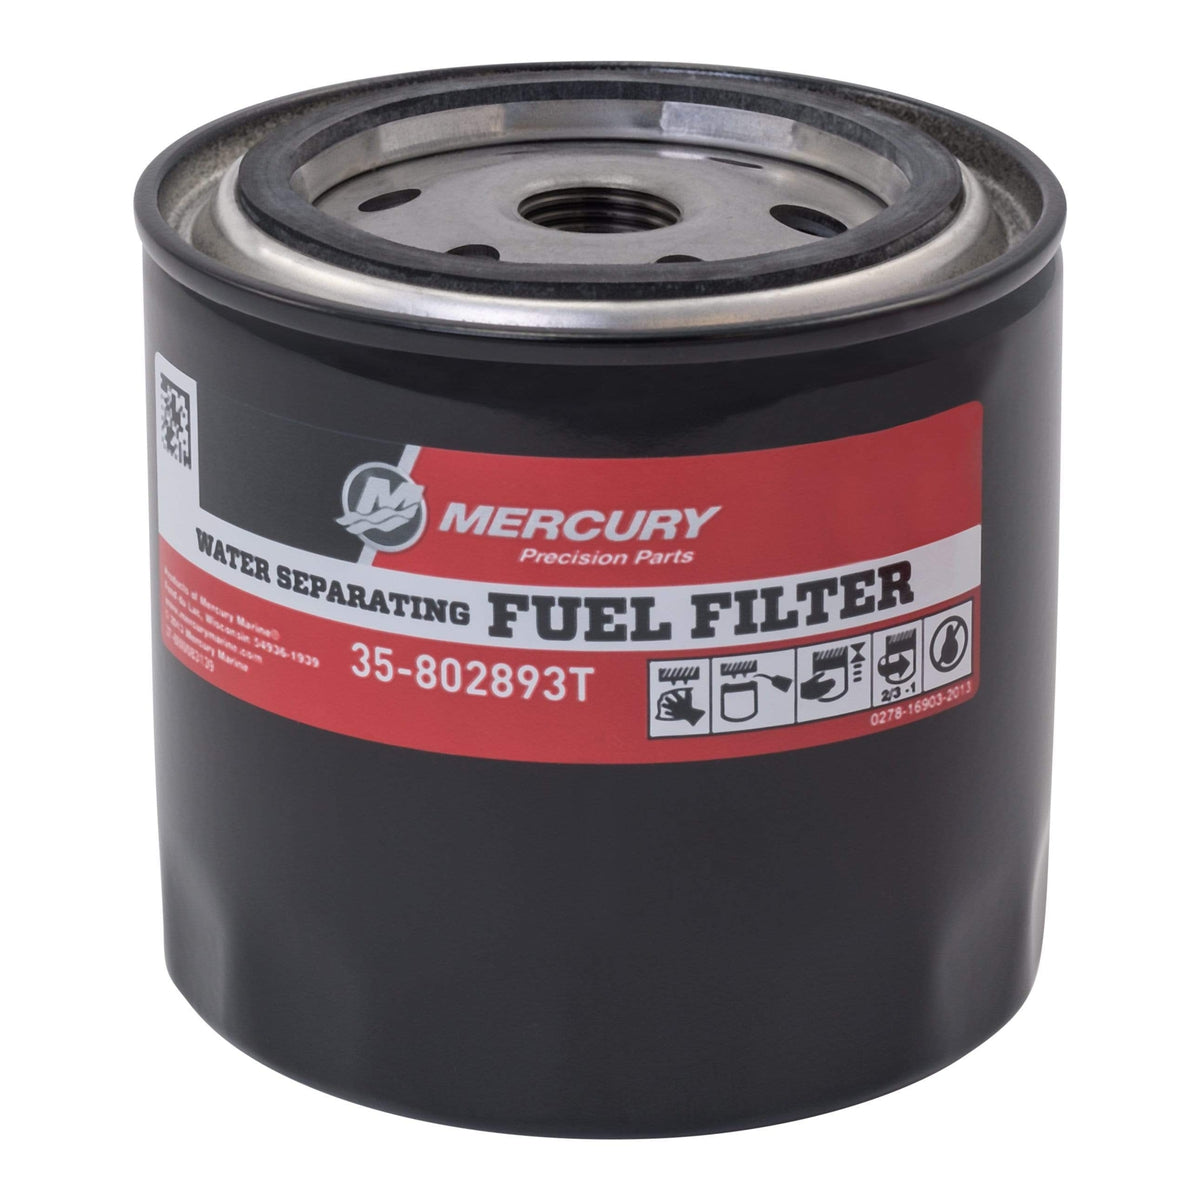 Mercury Marine Qualifies for Free Shipping Mercury Marine Fuel Filter Kit #35-807172A1